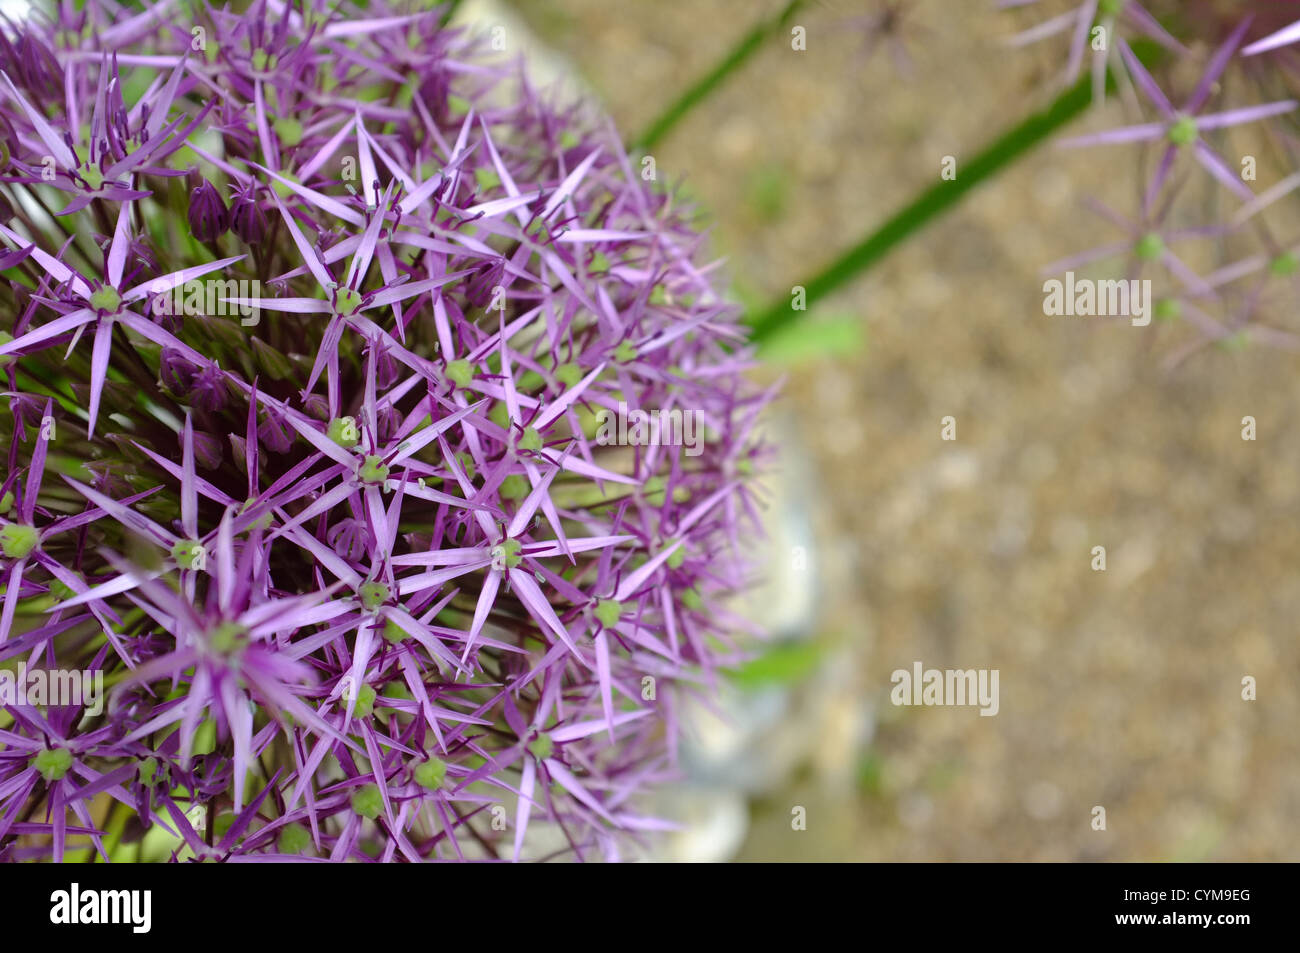 Star of Persia Allium cristophii - Close up flower detail Stock Photo